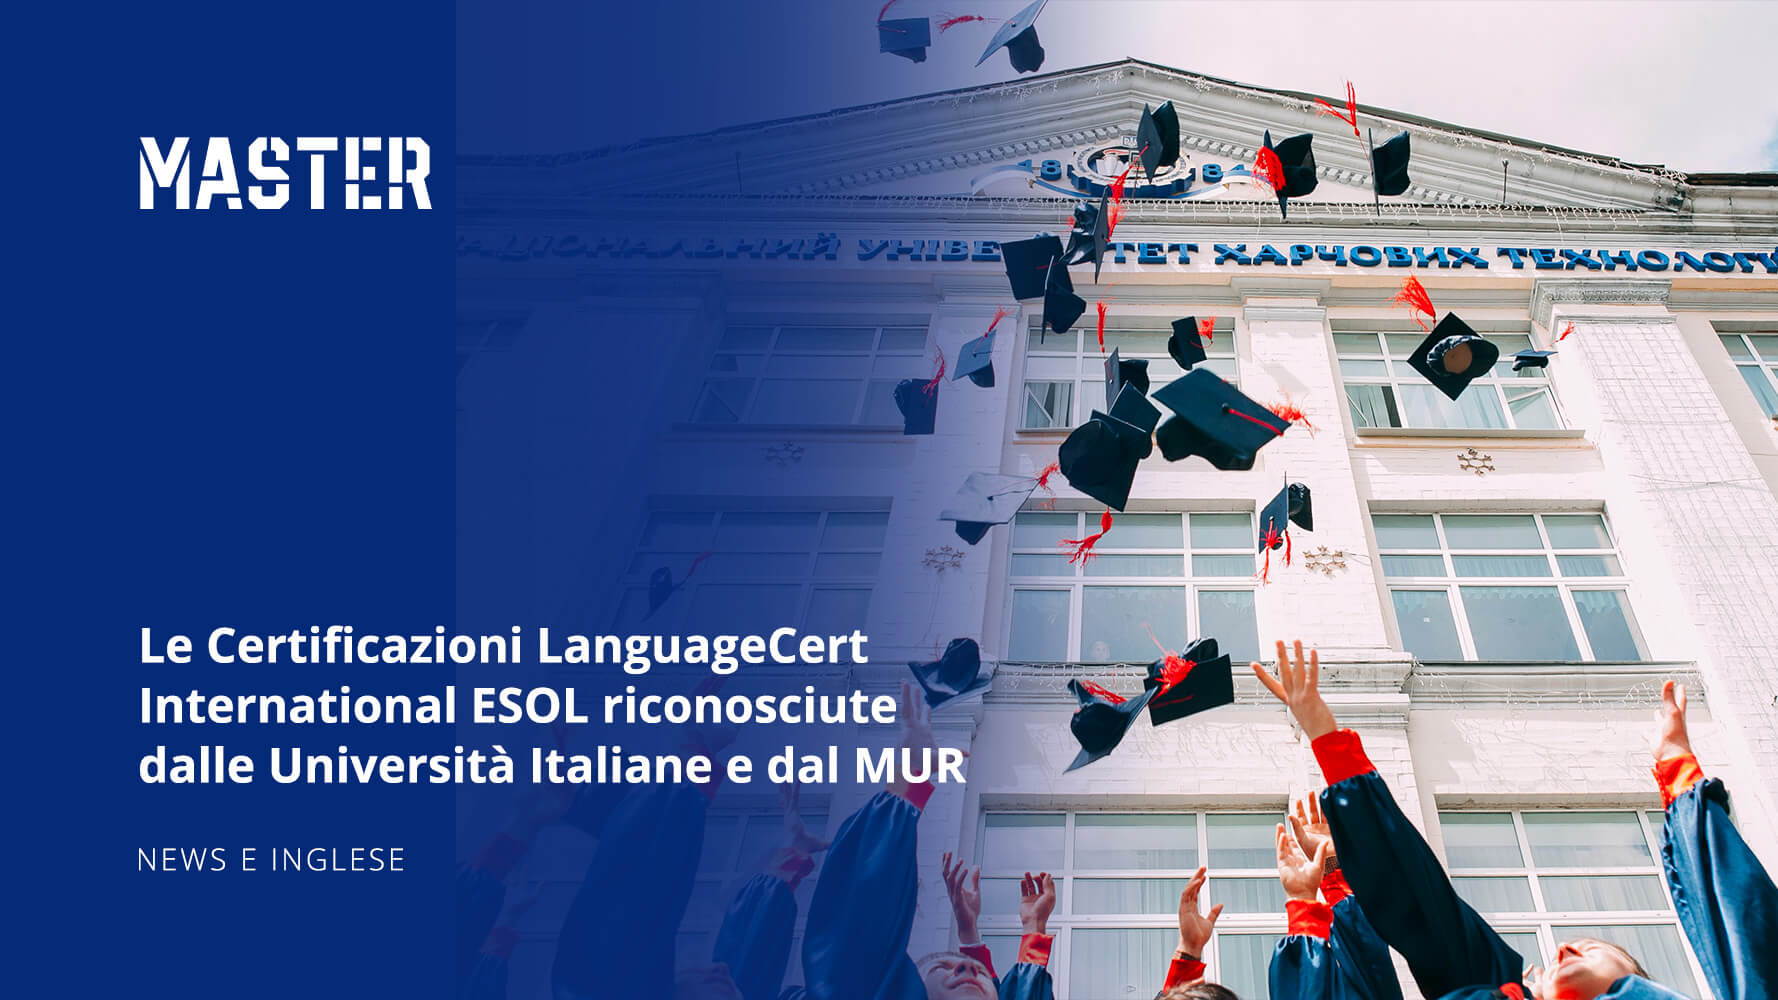 Le Certificazioni LanguageCert International ESOL